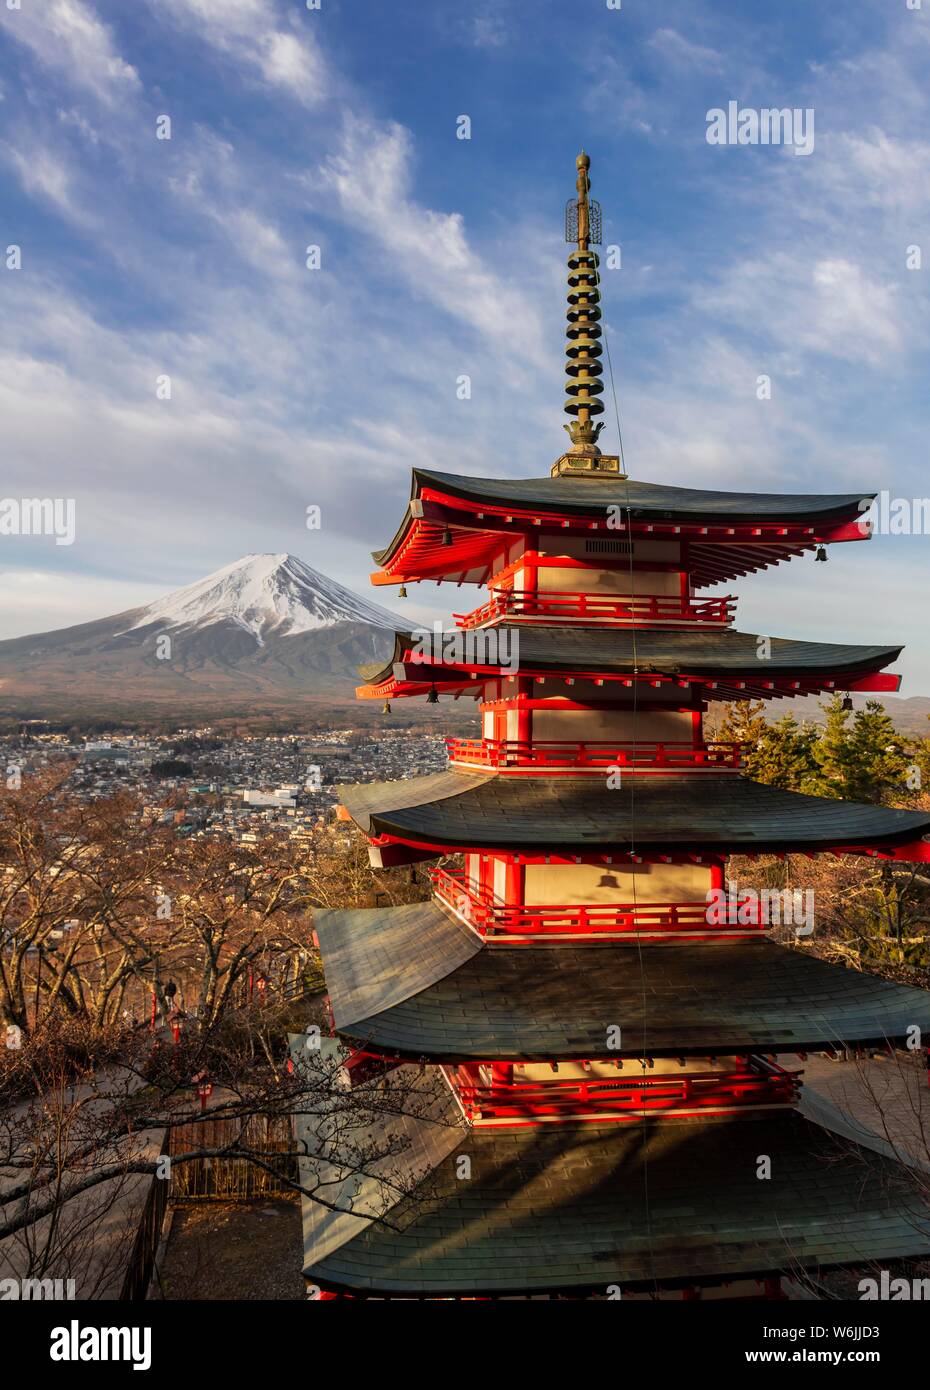 5-stöckige Pagode, Fujiyoshida Chureito Pagode, mit Blick auf die Stadt und den Berg Fuji Vulkan, Yamanashi Präfektur, Japan Stockfoto